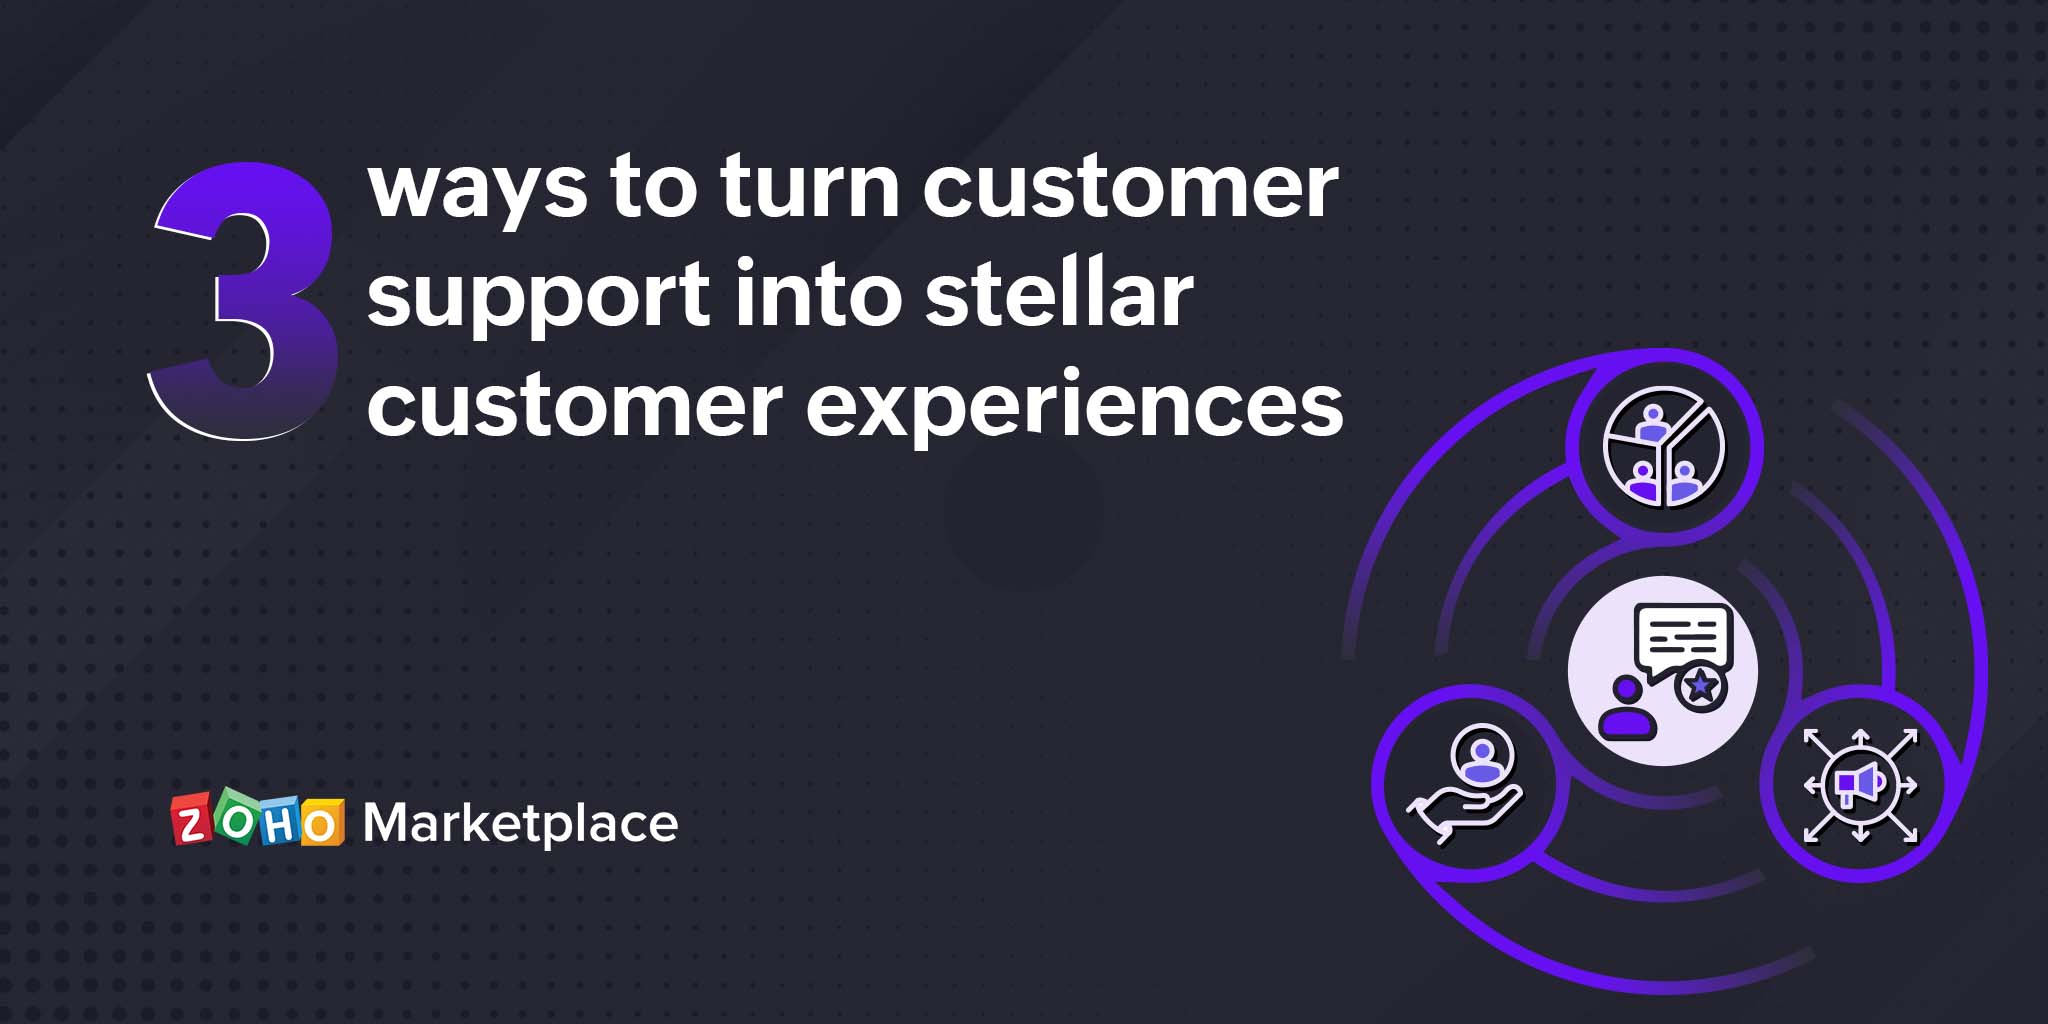 3 ways to turn customer support into stellar customer experiences